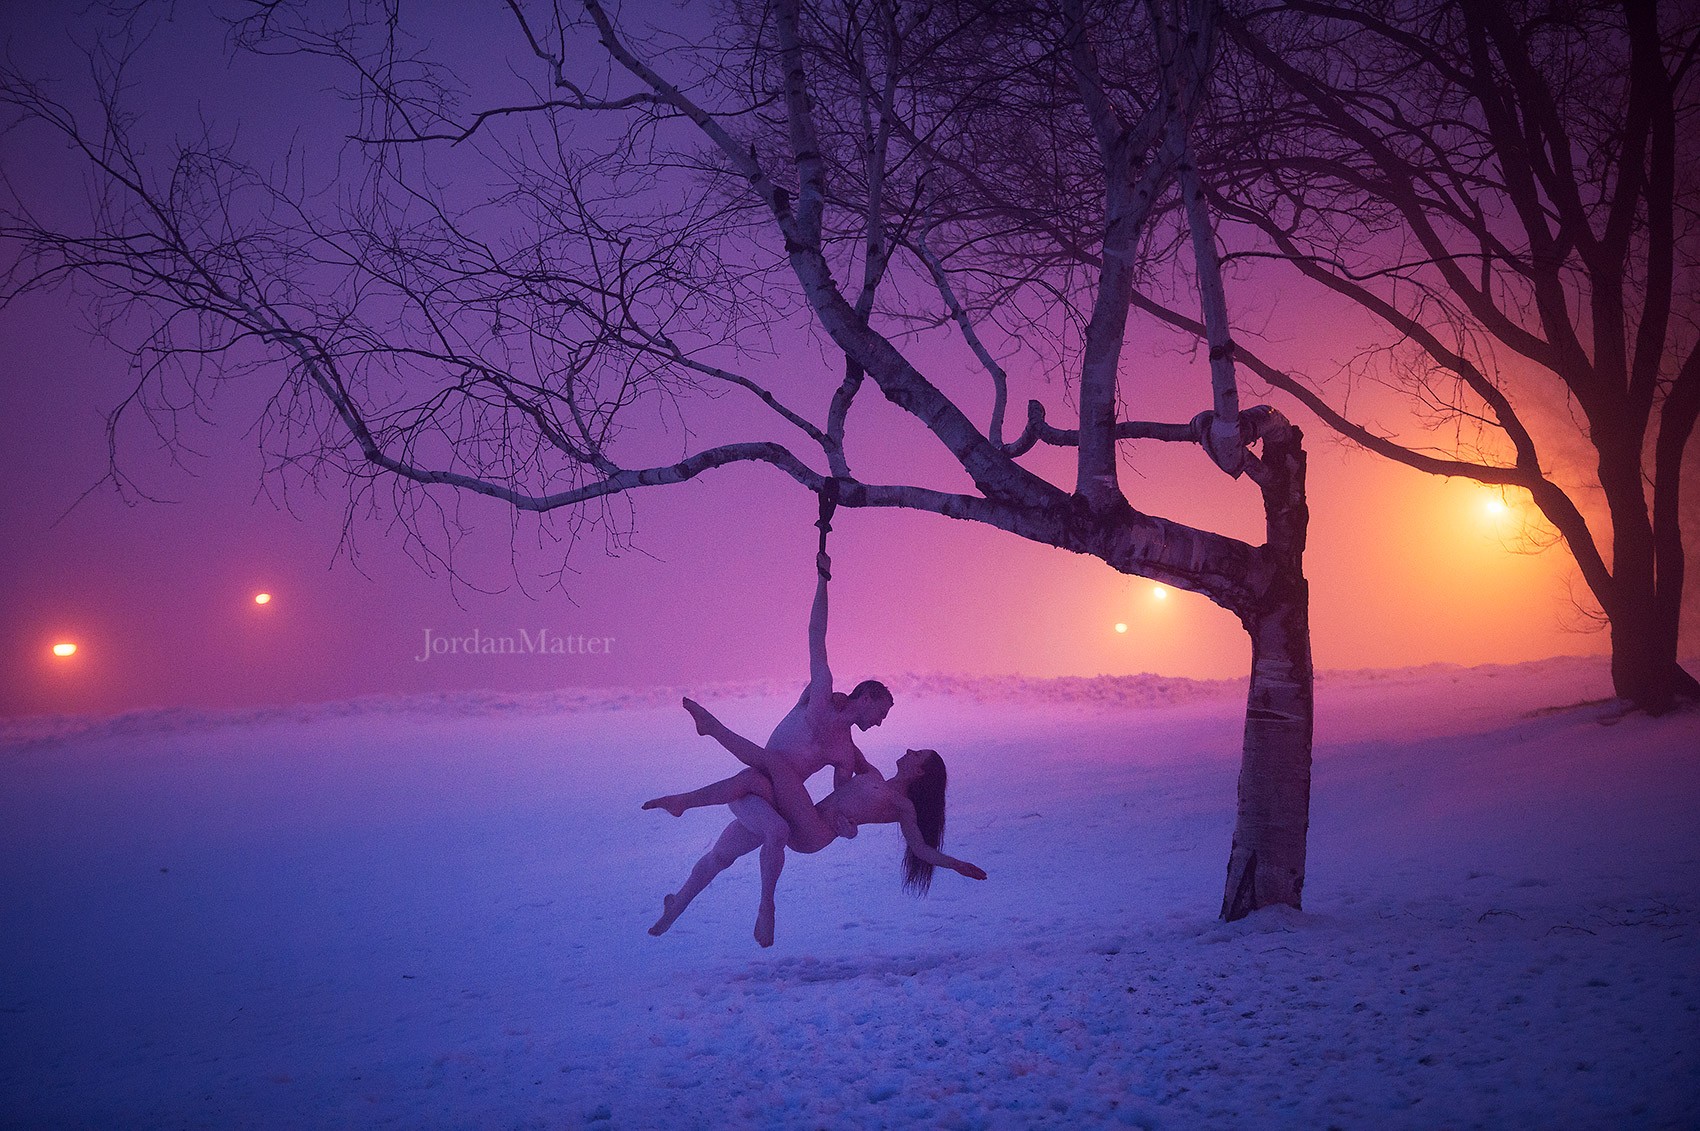 1700x1131, 561 Kb / Jordan Matter, двое, мужчина, женщина, голые, снег, туман, деревья, ветви